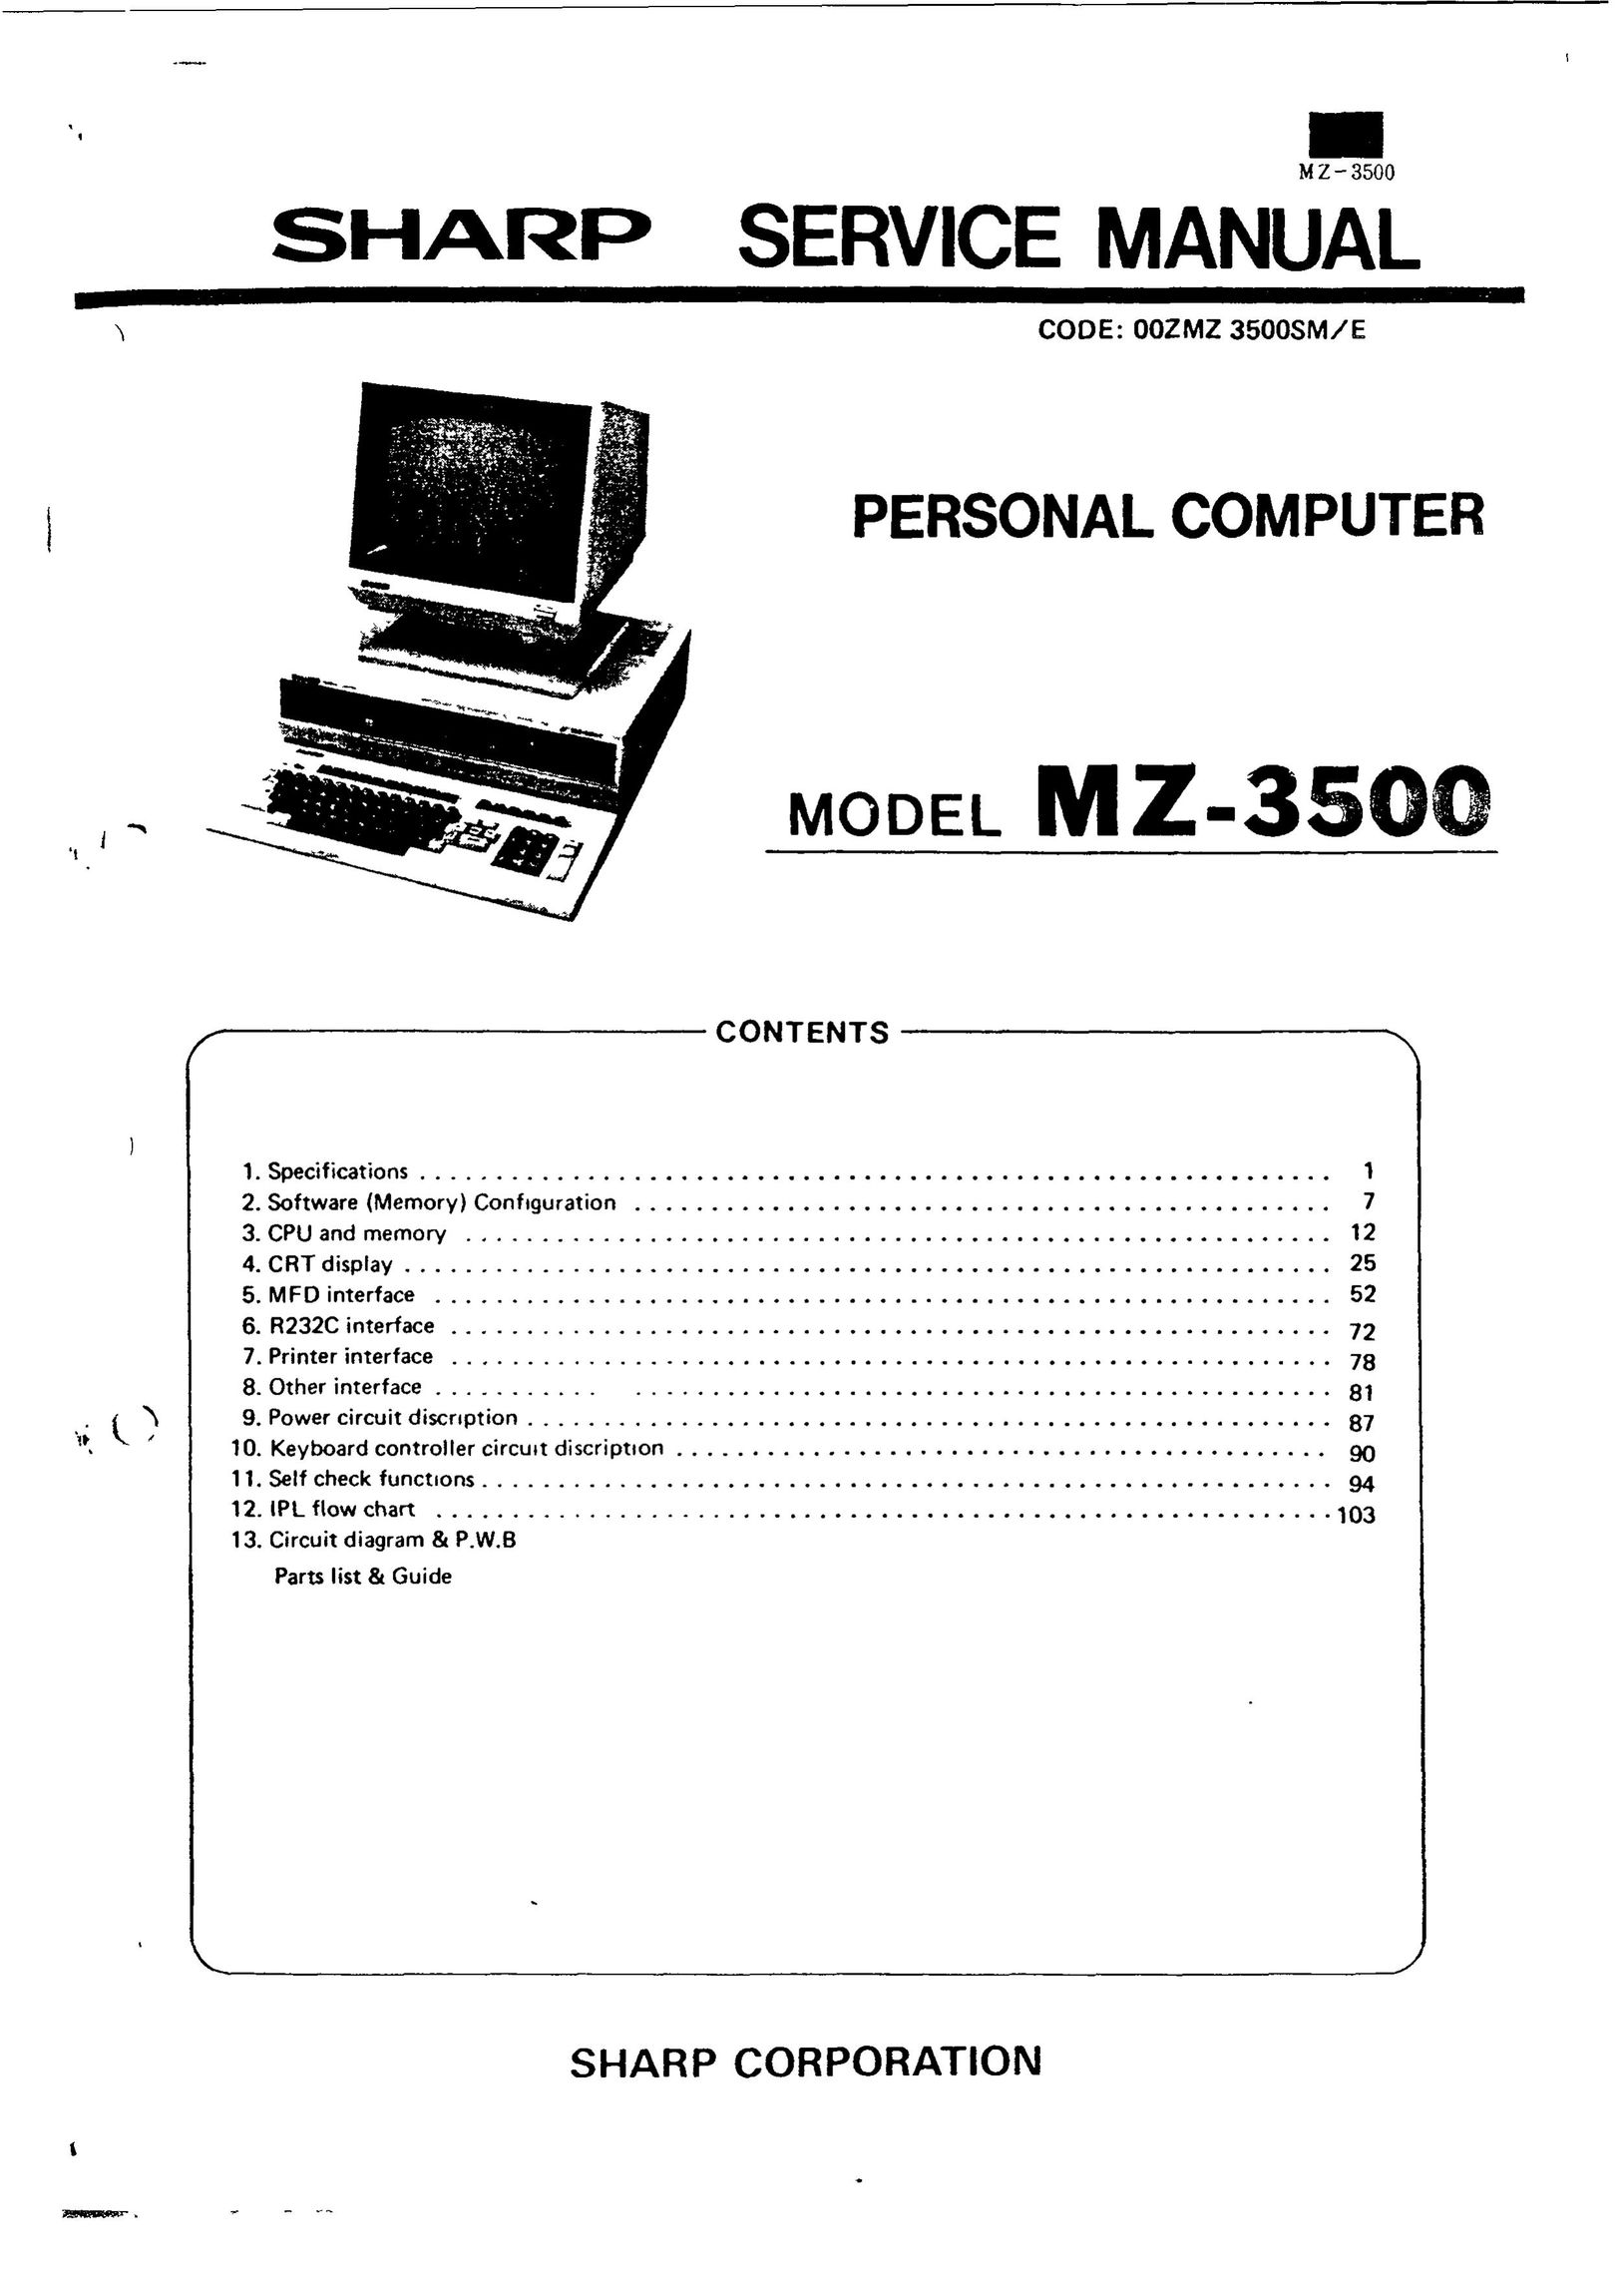 Sharp MZ-3500 Personal Computer User Manual